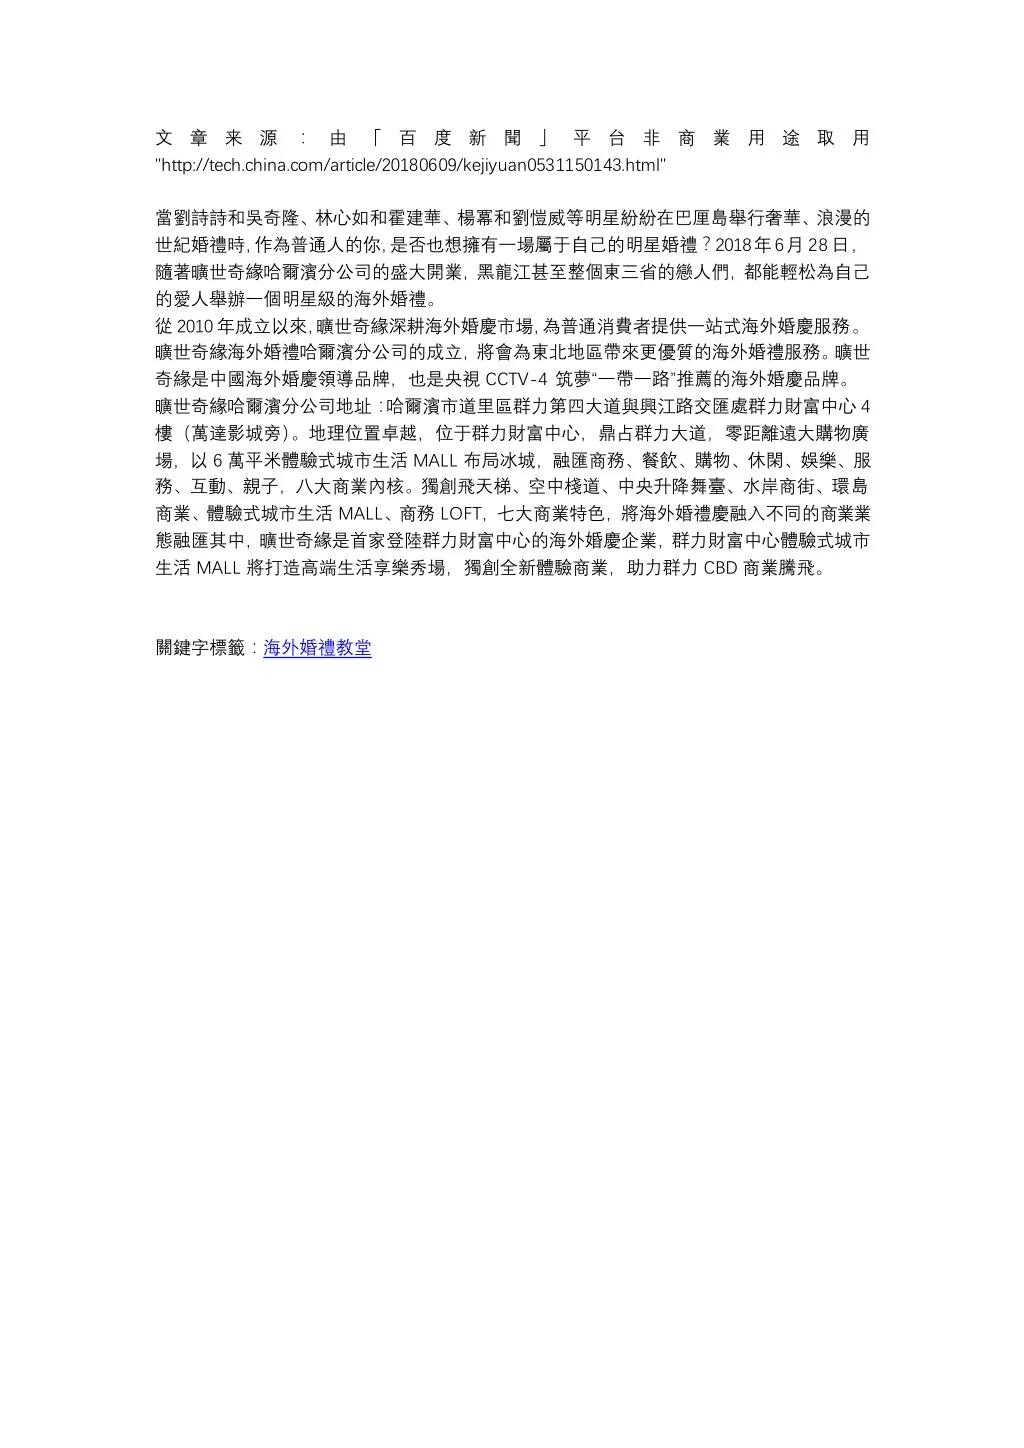 http tech china com article 20180609